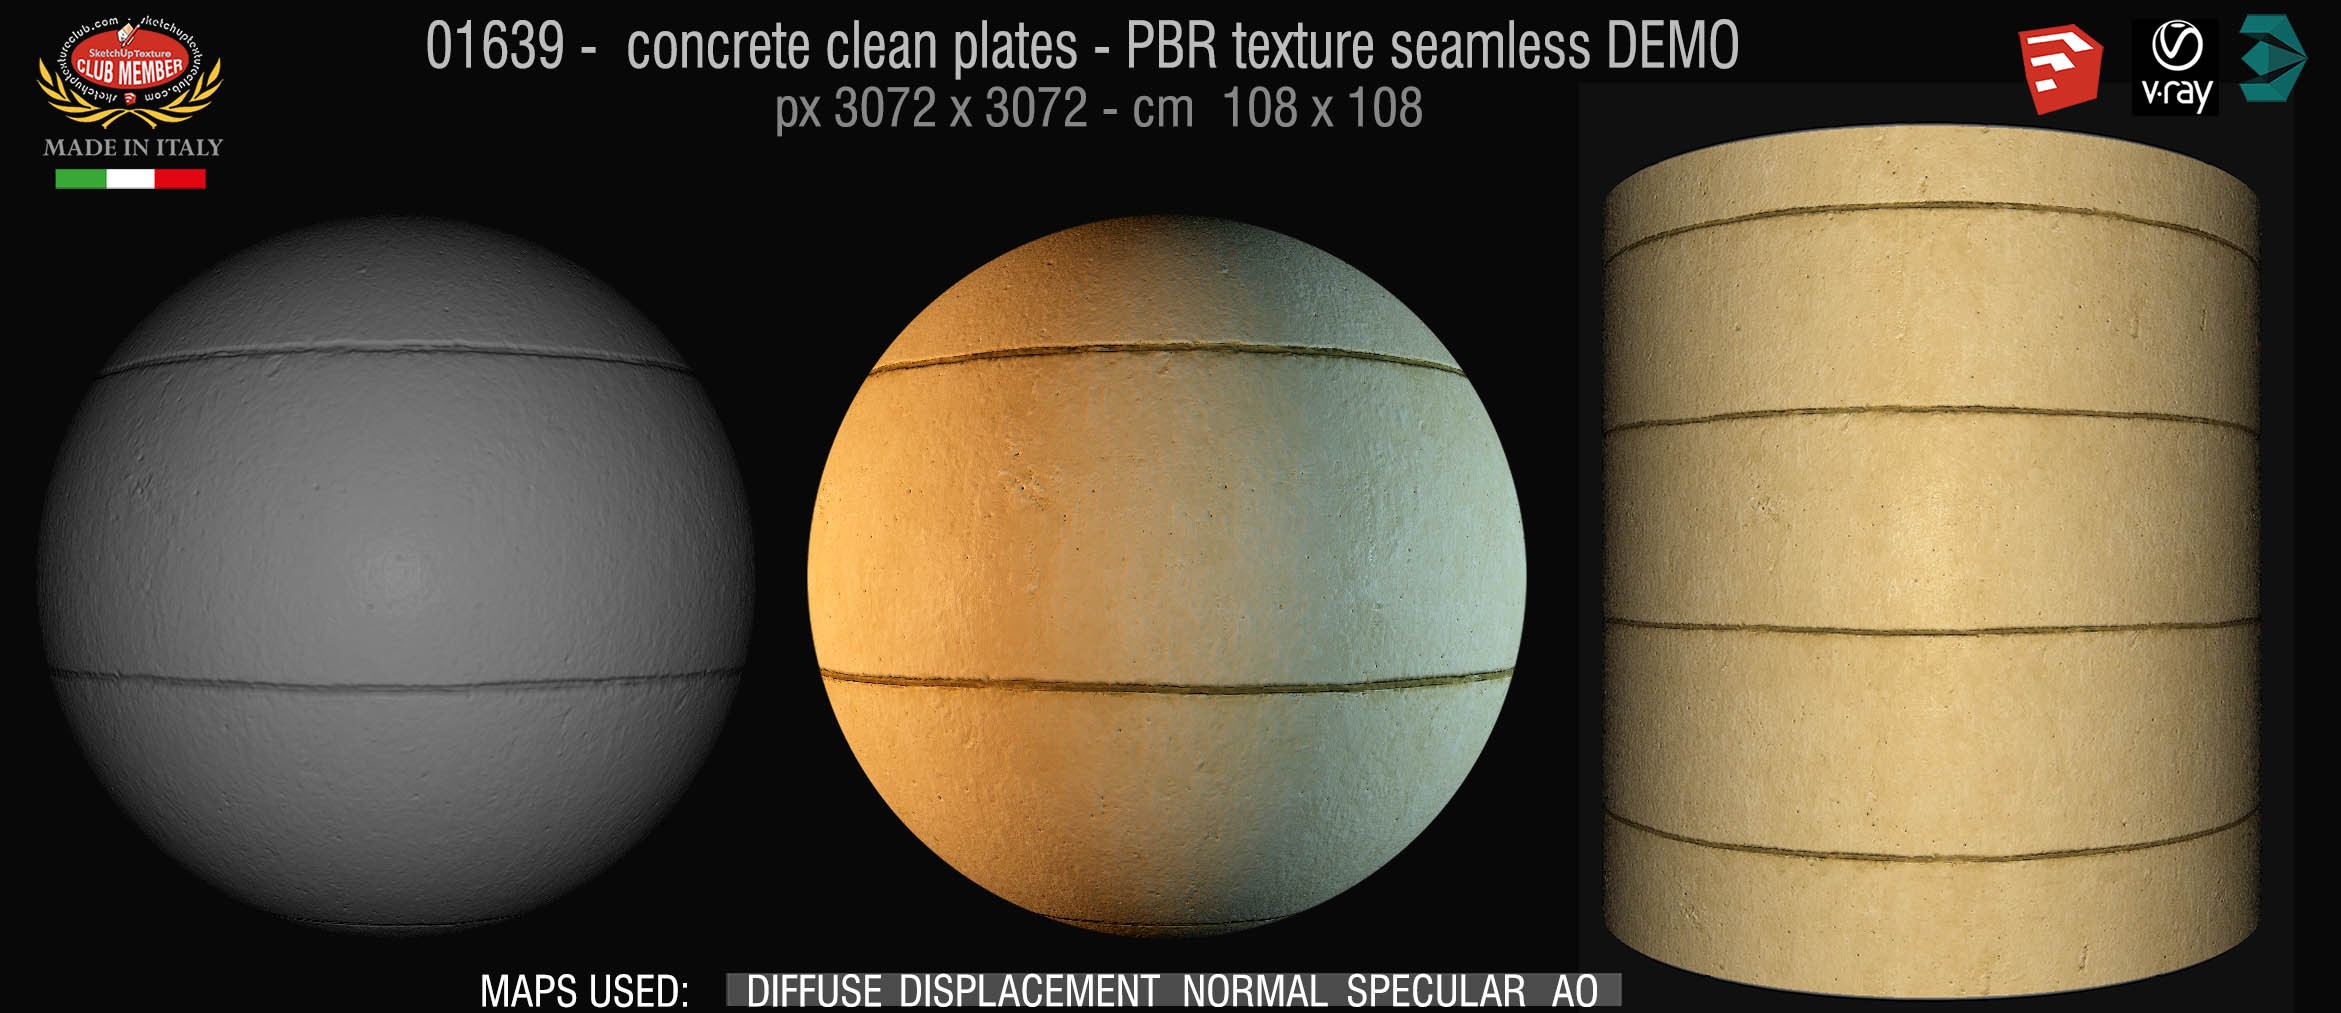 01639 concrete clean plates wall PBR texture seamless DEMO